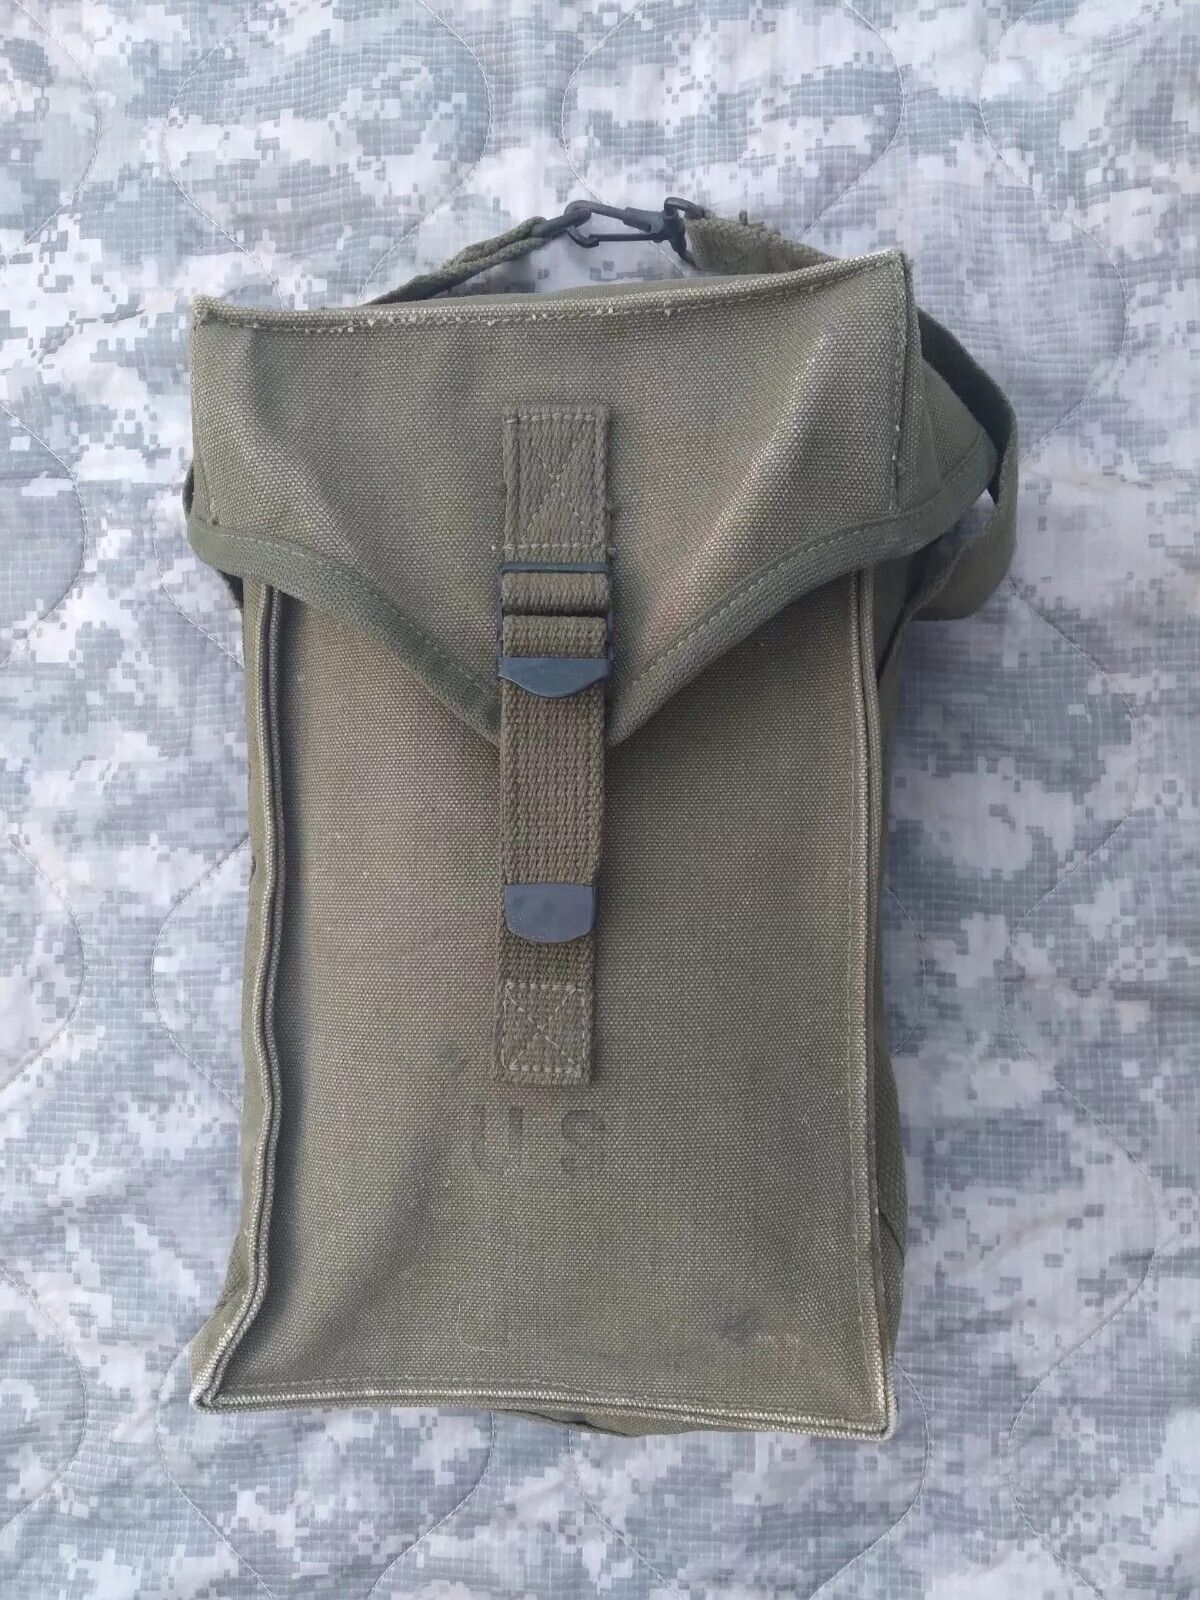 US Army Military GP General Purpose Ammo Ammunition Shoulder Bag Pouch Original 